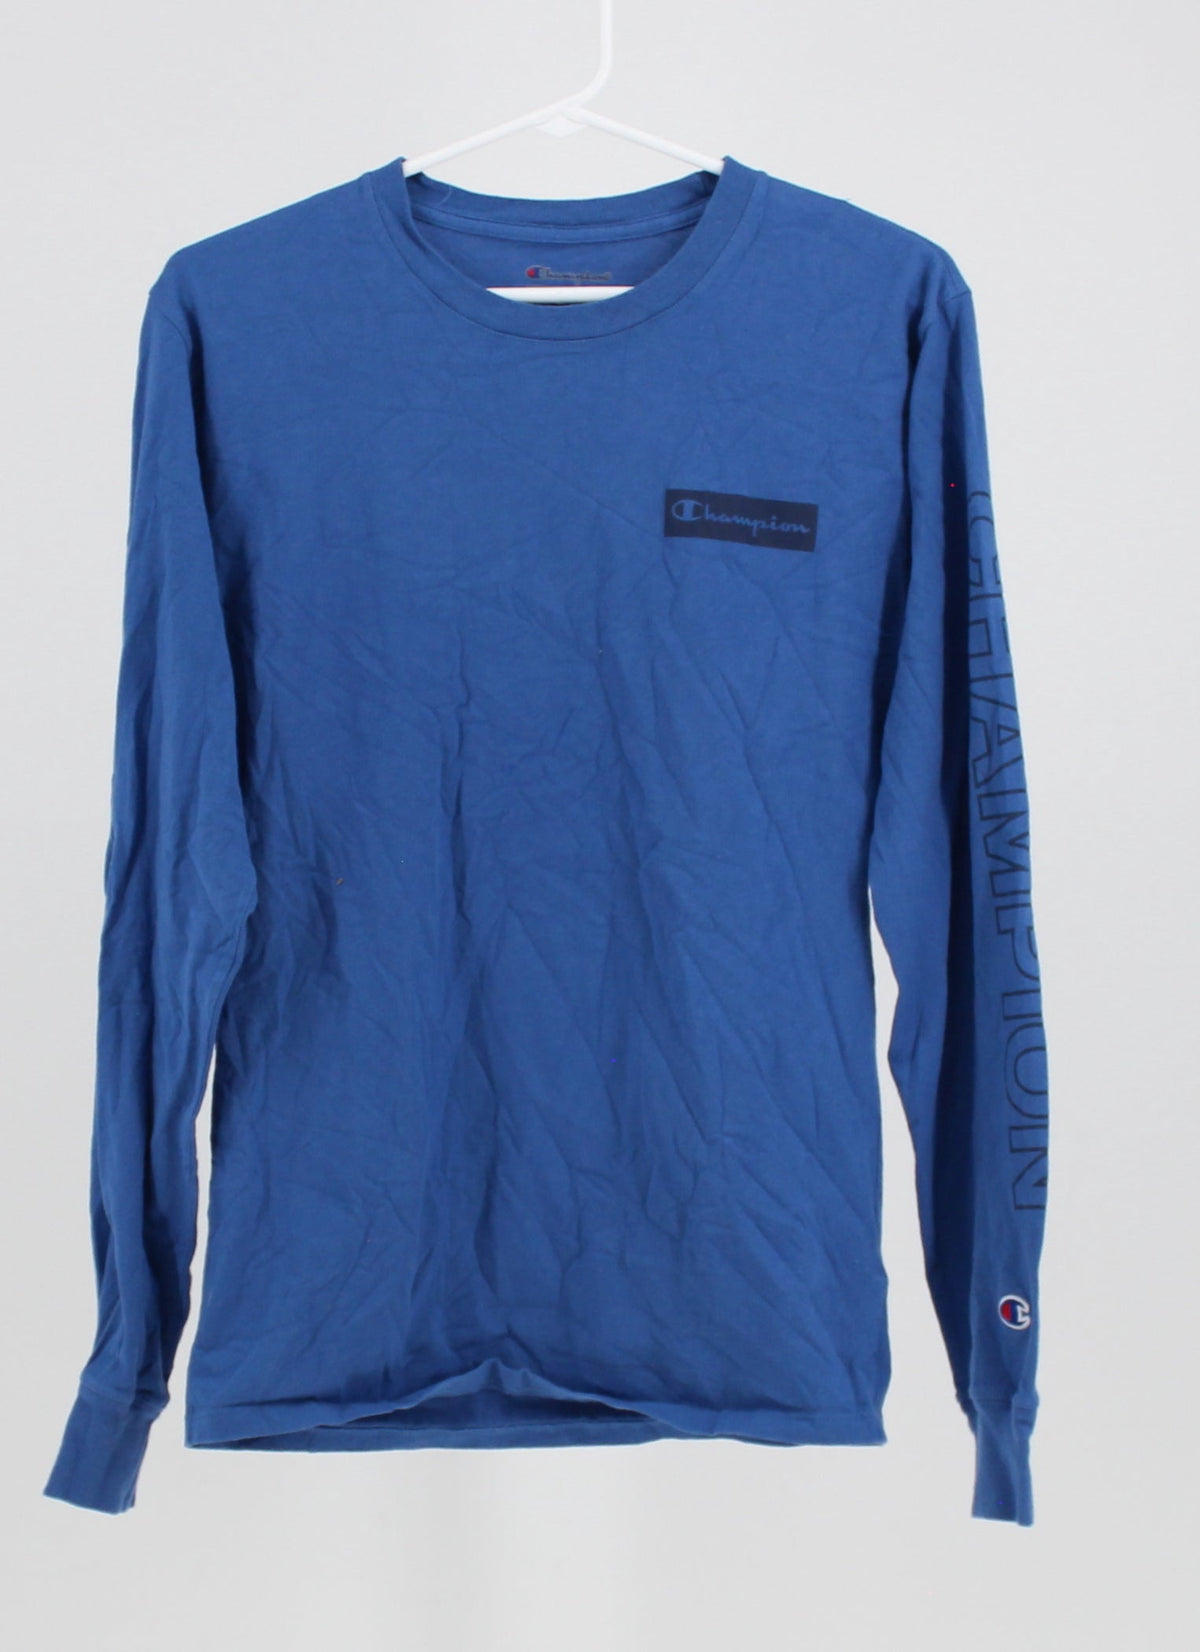 Champion Blue Long sleeve Shirt with Logo on Sleeve